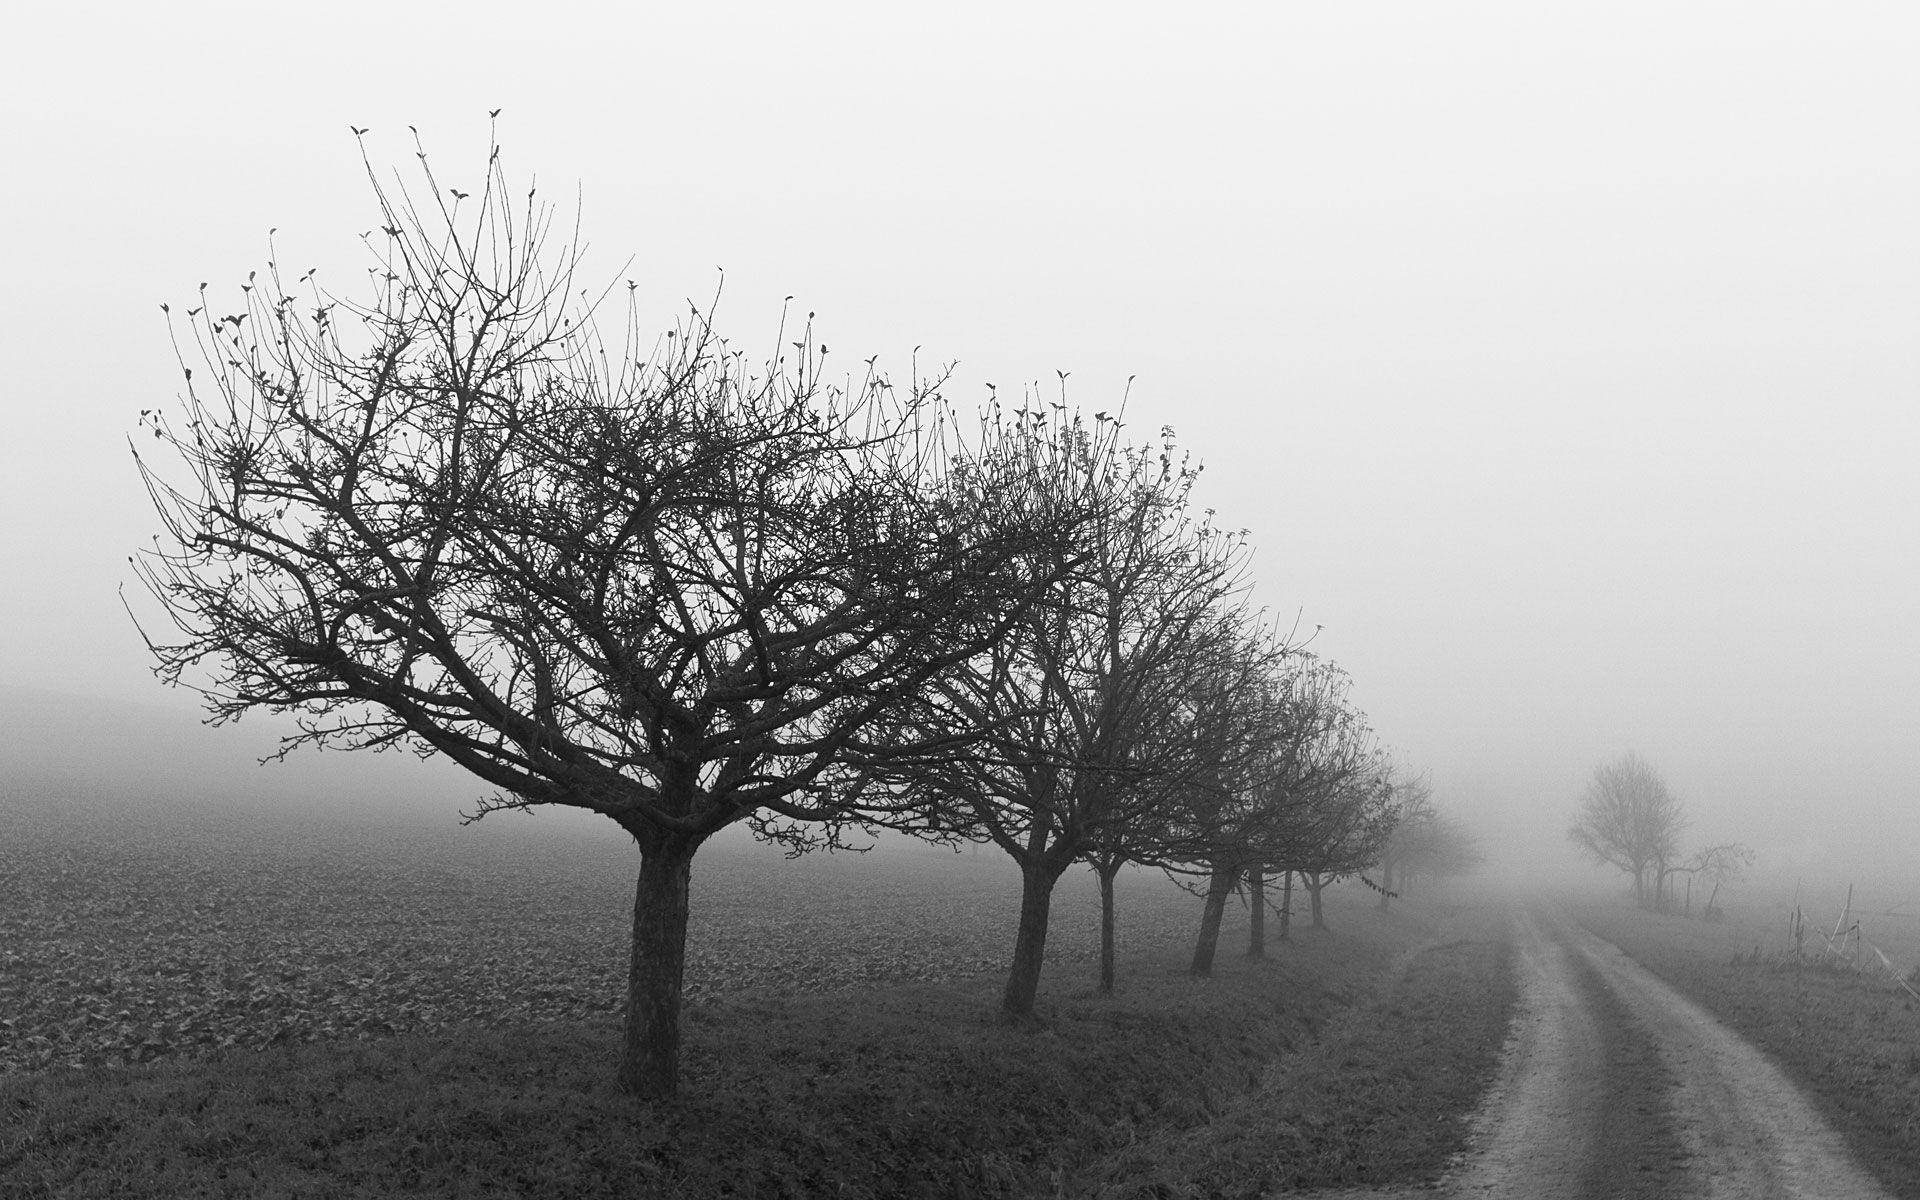 Foggy Tree Line Depression Wallpaper